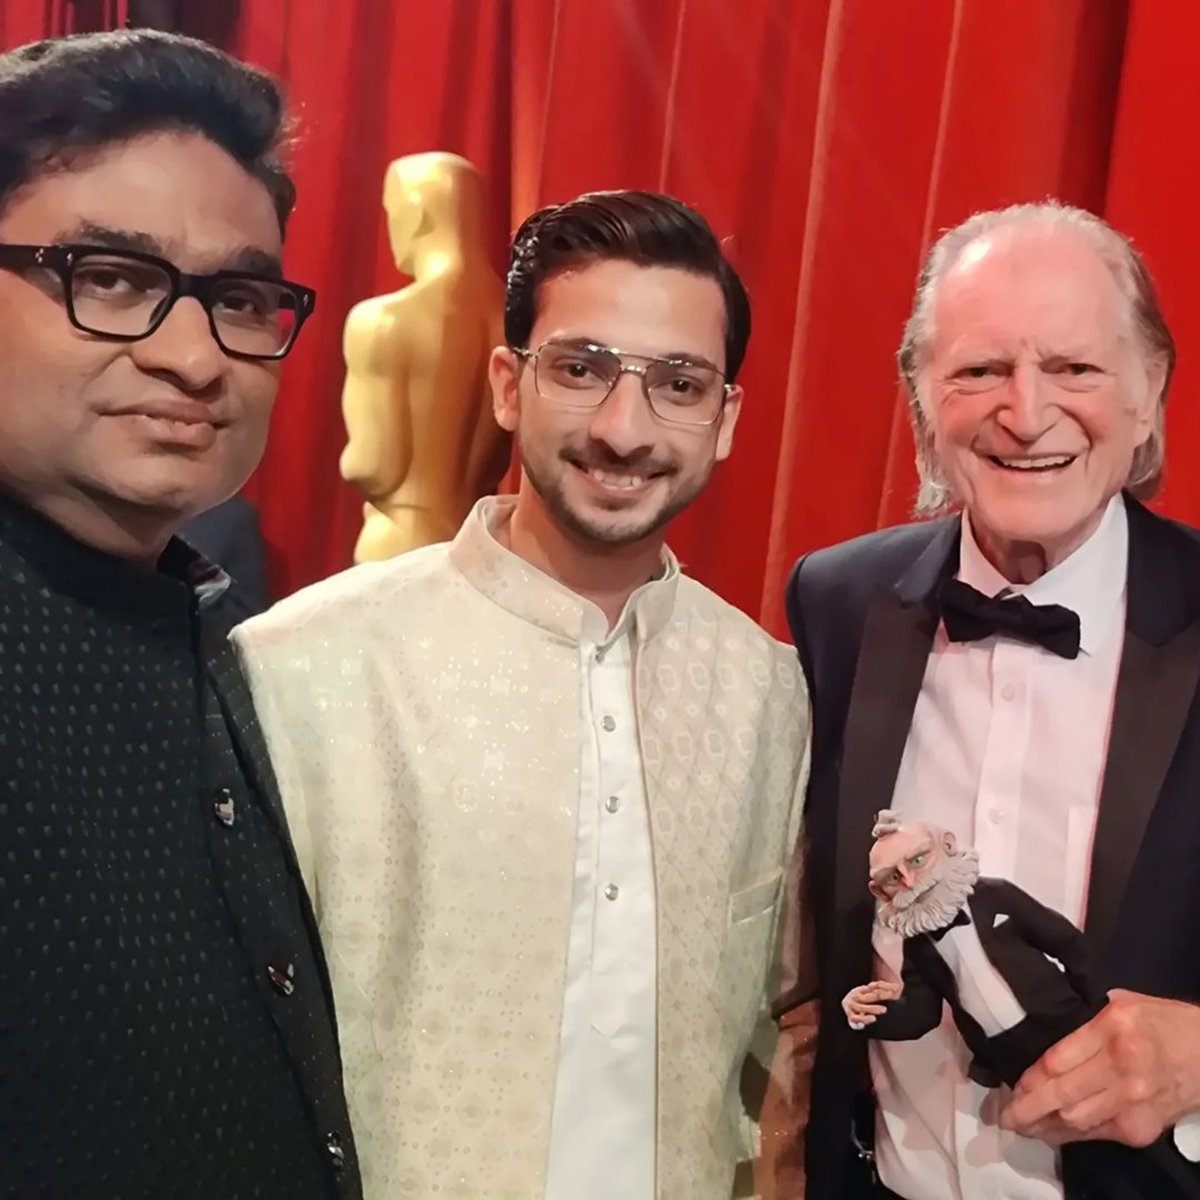 Nadeem, Salik and the iconic David Bradley at the 95th Academy Awards 🎥 

#AllThatBreathes #oscars95 #oscars #academyawards #hbodocumentaryfilms #shaunaksen